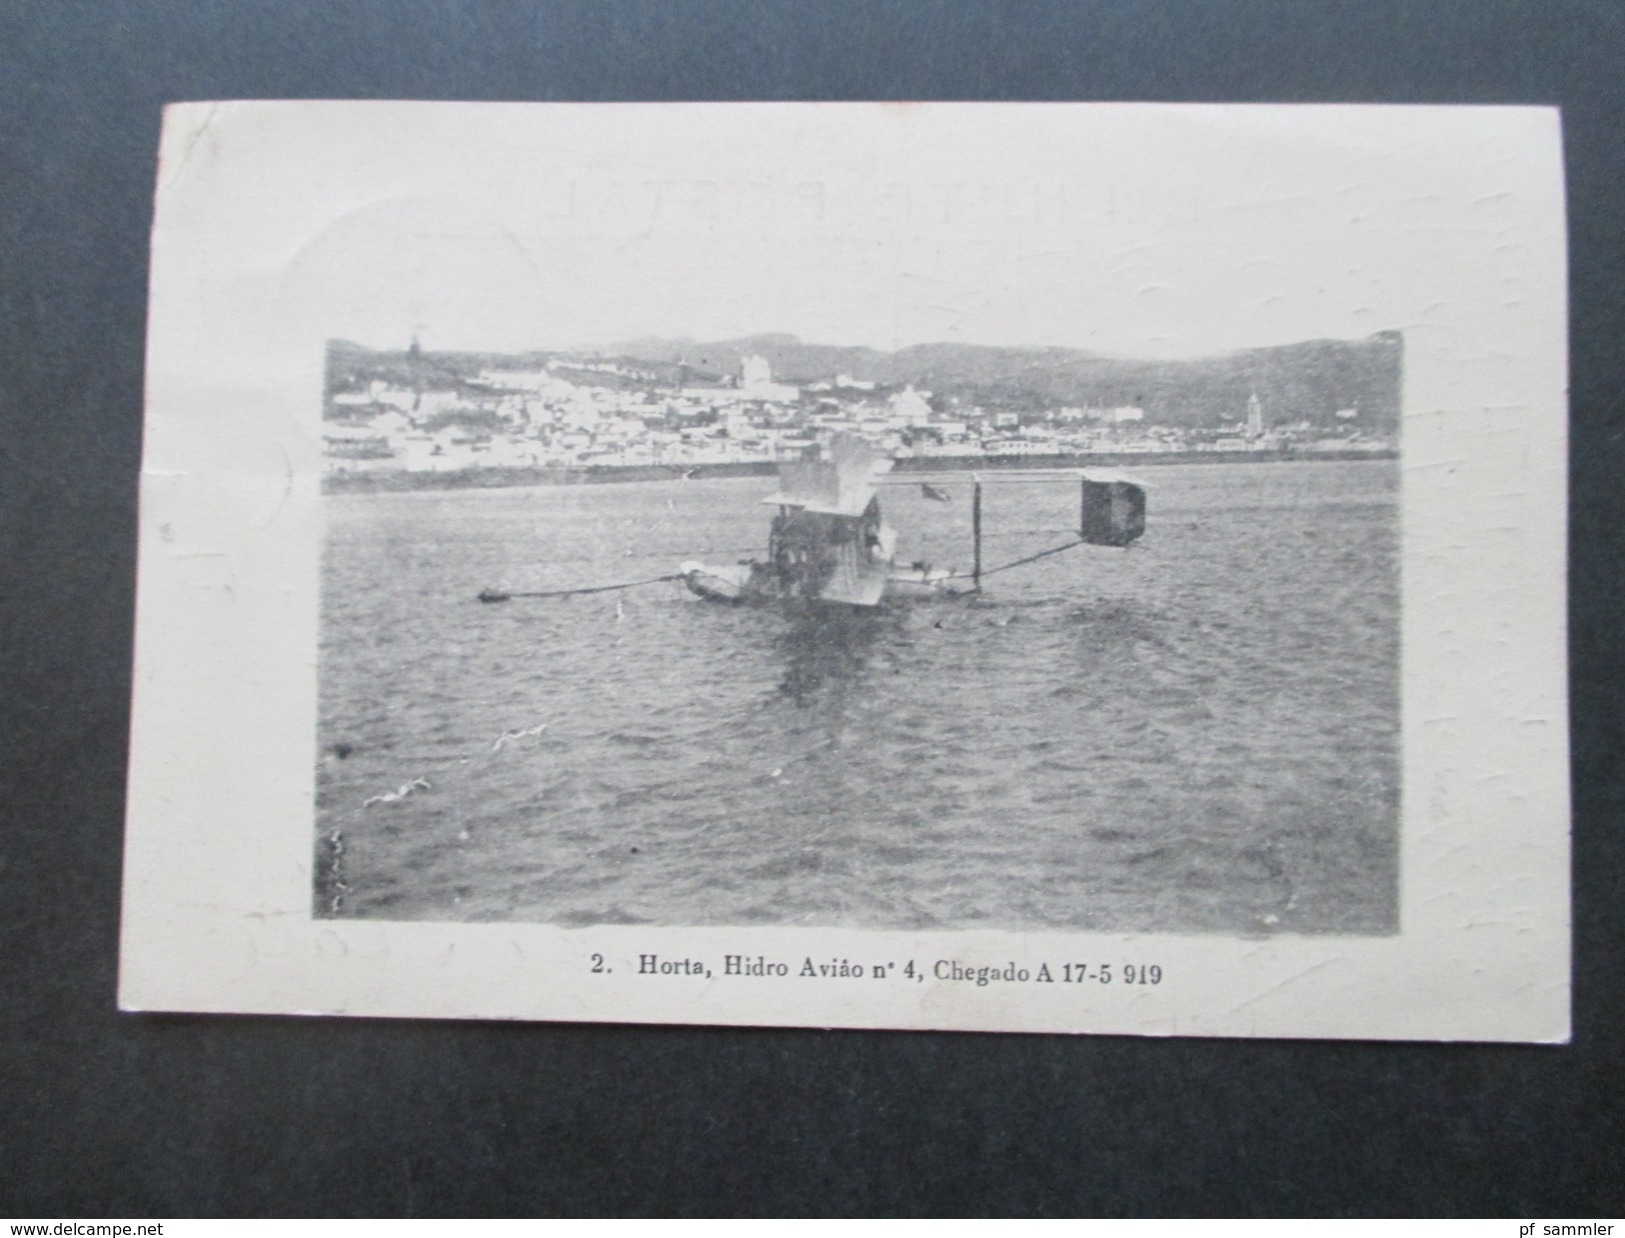 AK/Echtfoto Wasserflugzeug. Acores / Azoren 1910/20er Jahre!Nach Zoppot Danzig. Horta, Hidro Aviao N4 Chegado A 17-5 919 - 1919-1938